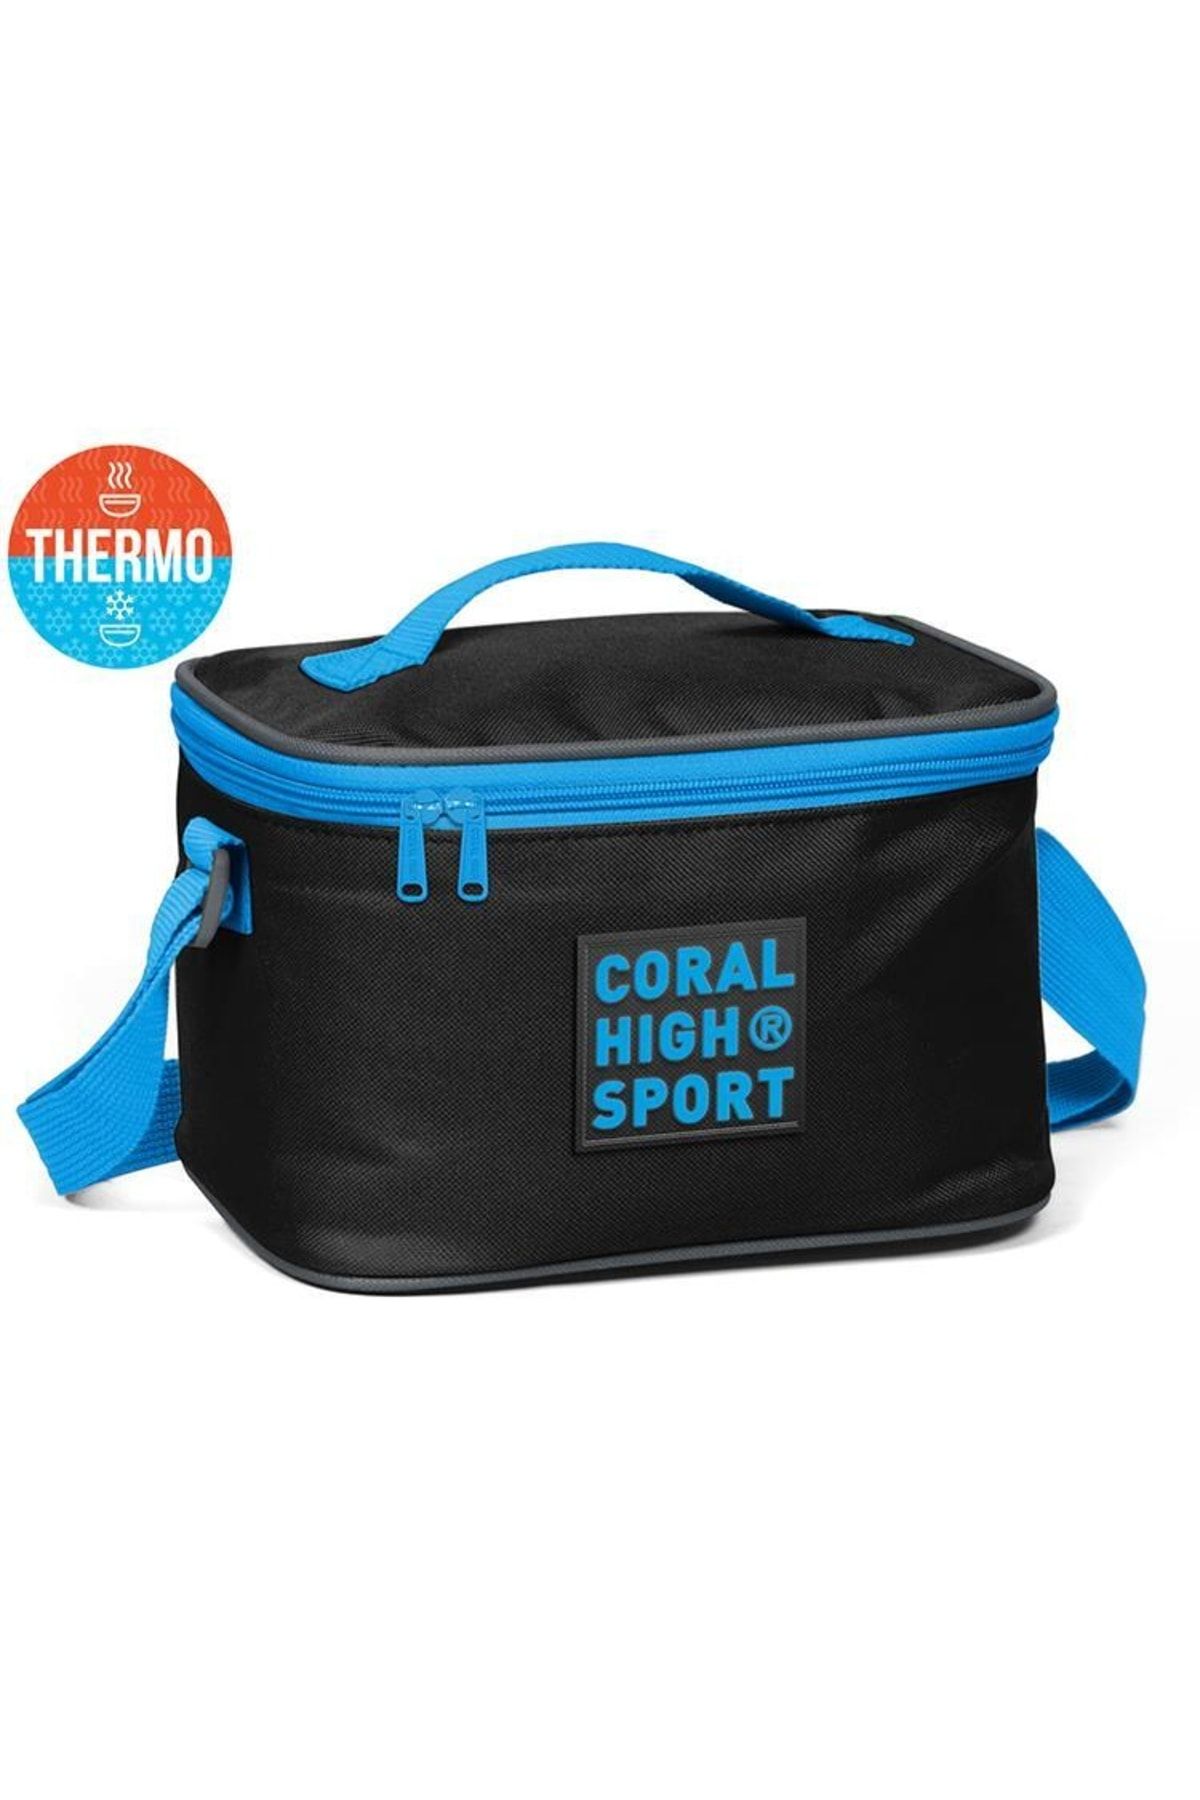 Coral High Sport Siyah Gri Thermo Beslenme Çantası 22810